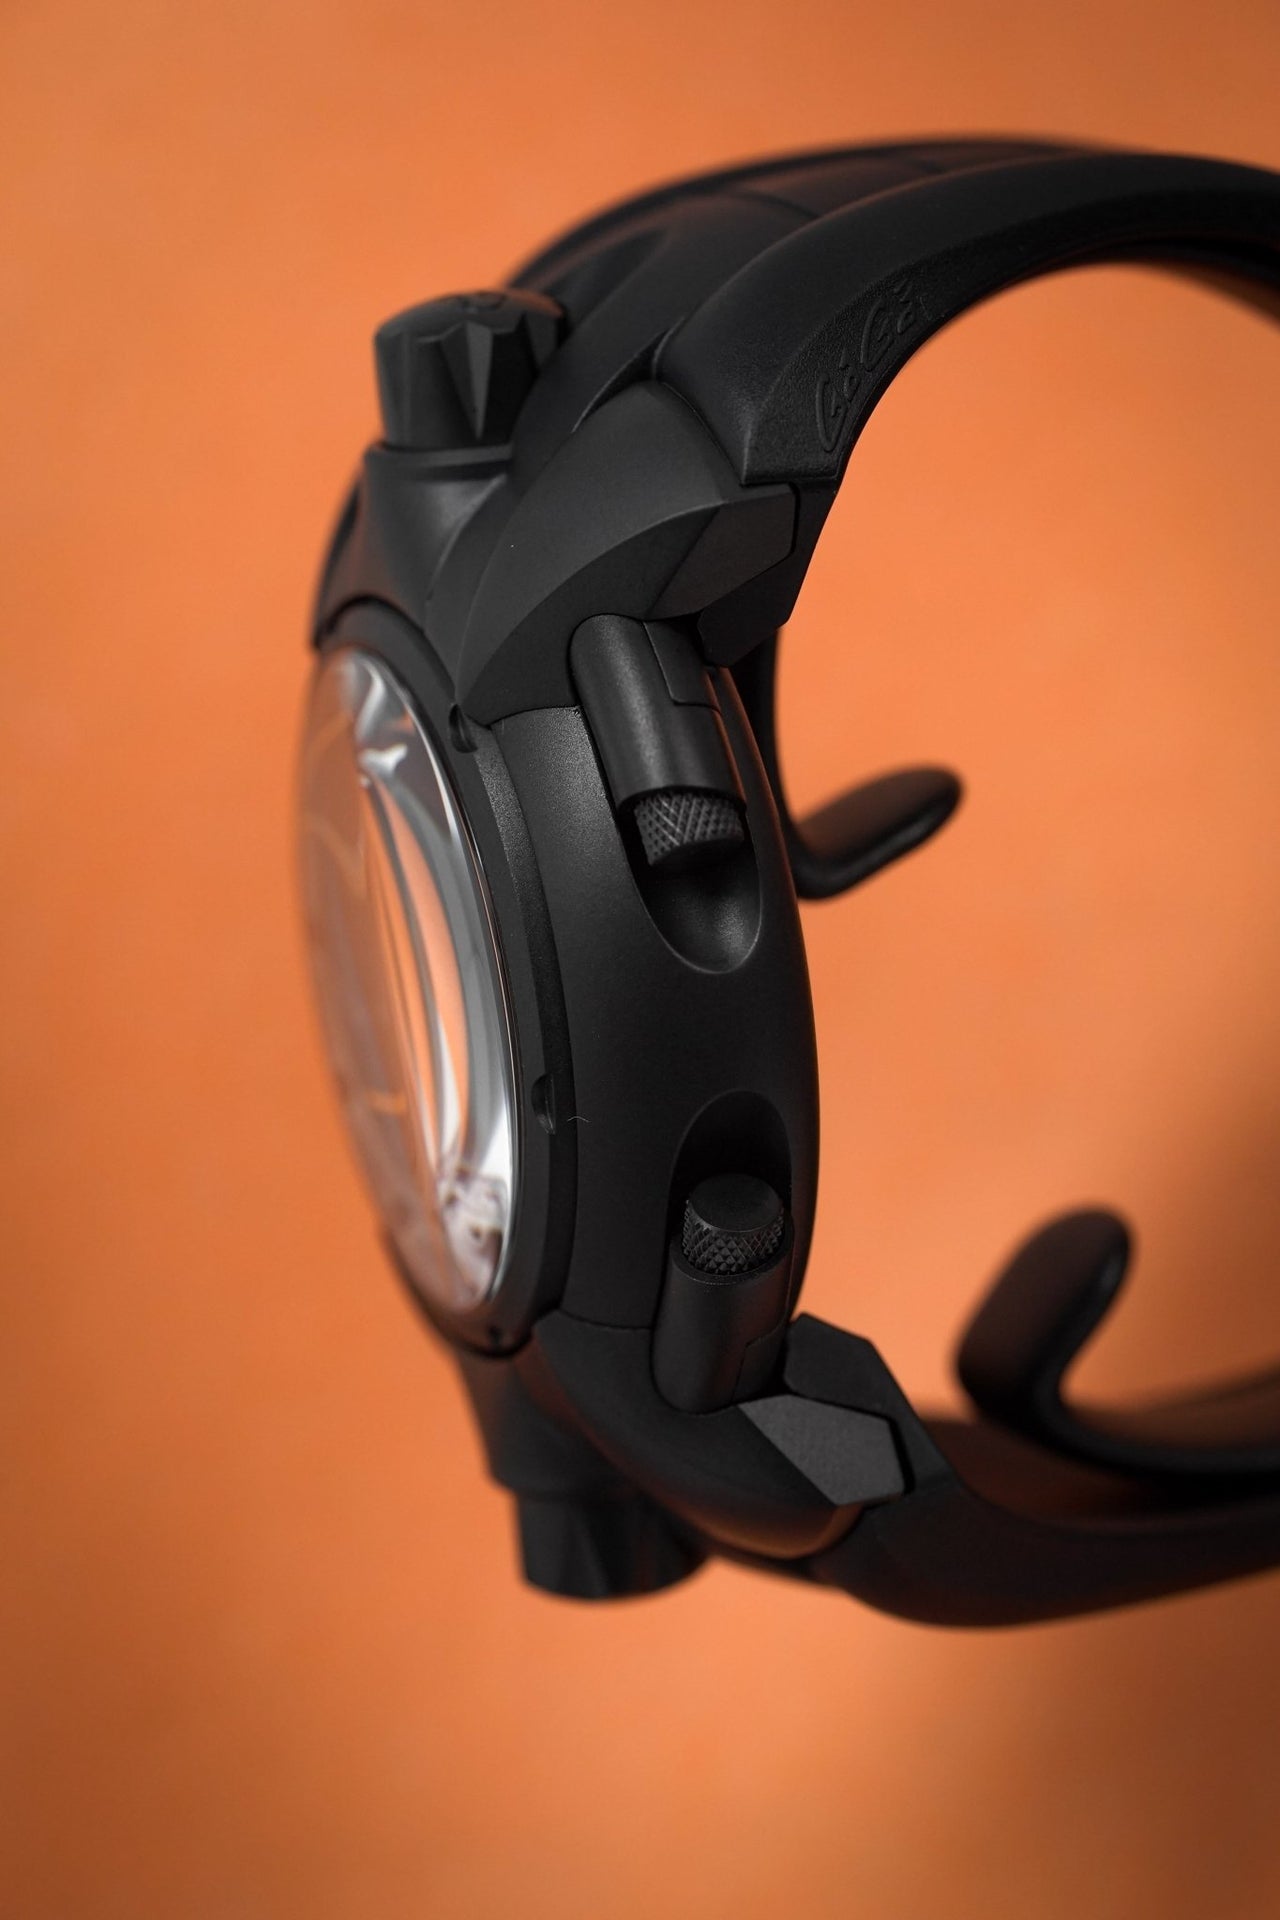 GaGa Milano Men's Batman Watch Orange - Watches & Crystals